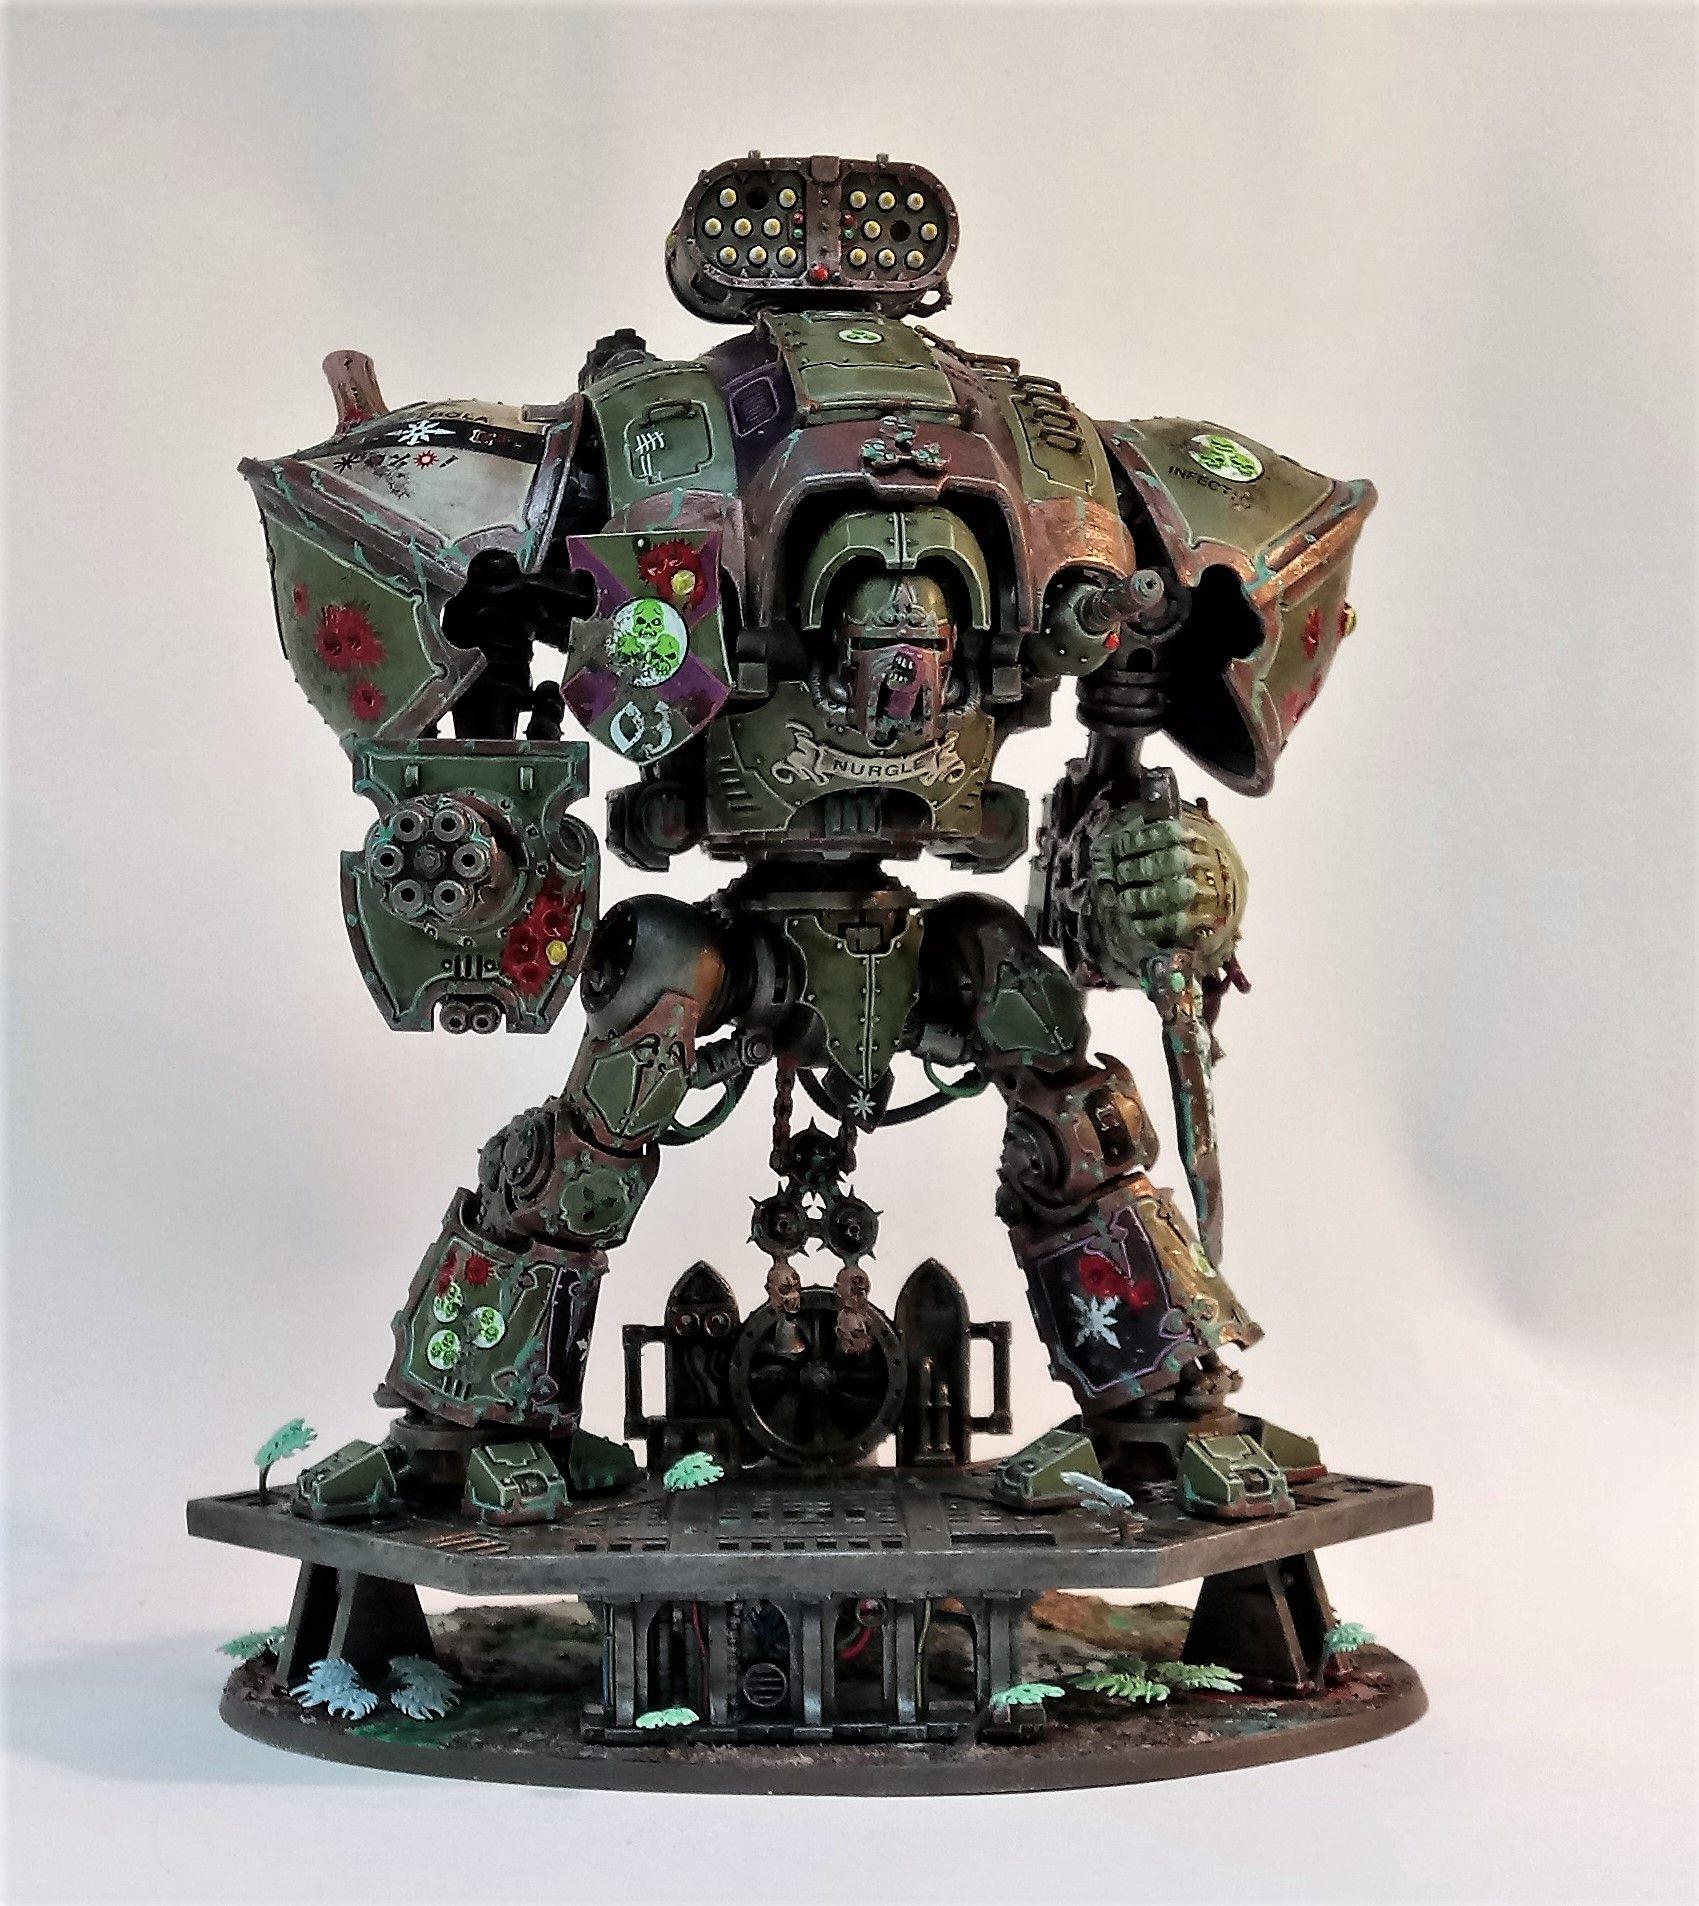 Figurine A Peindre Warhammer pas cher - Achat neuf et occasion